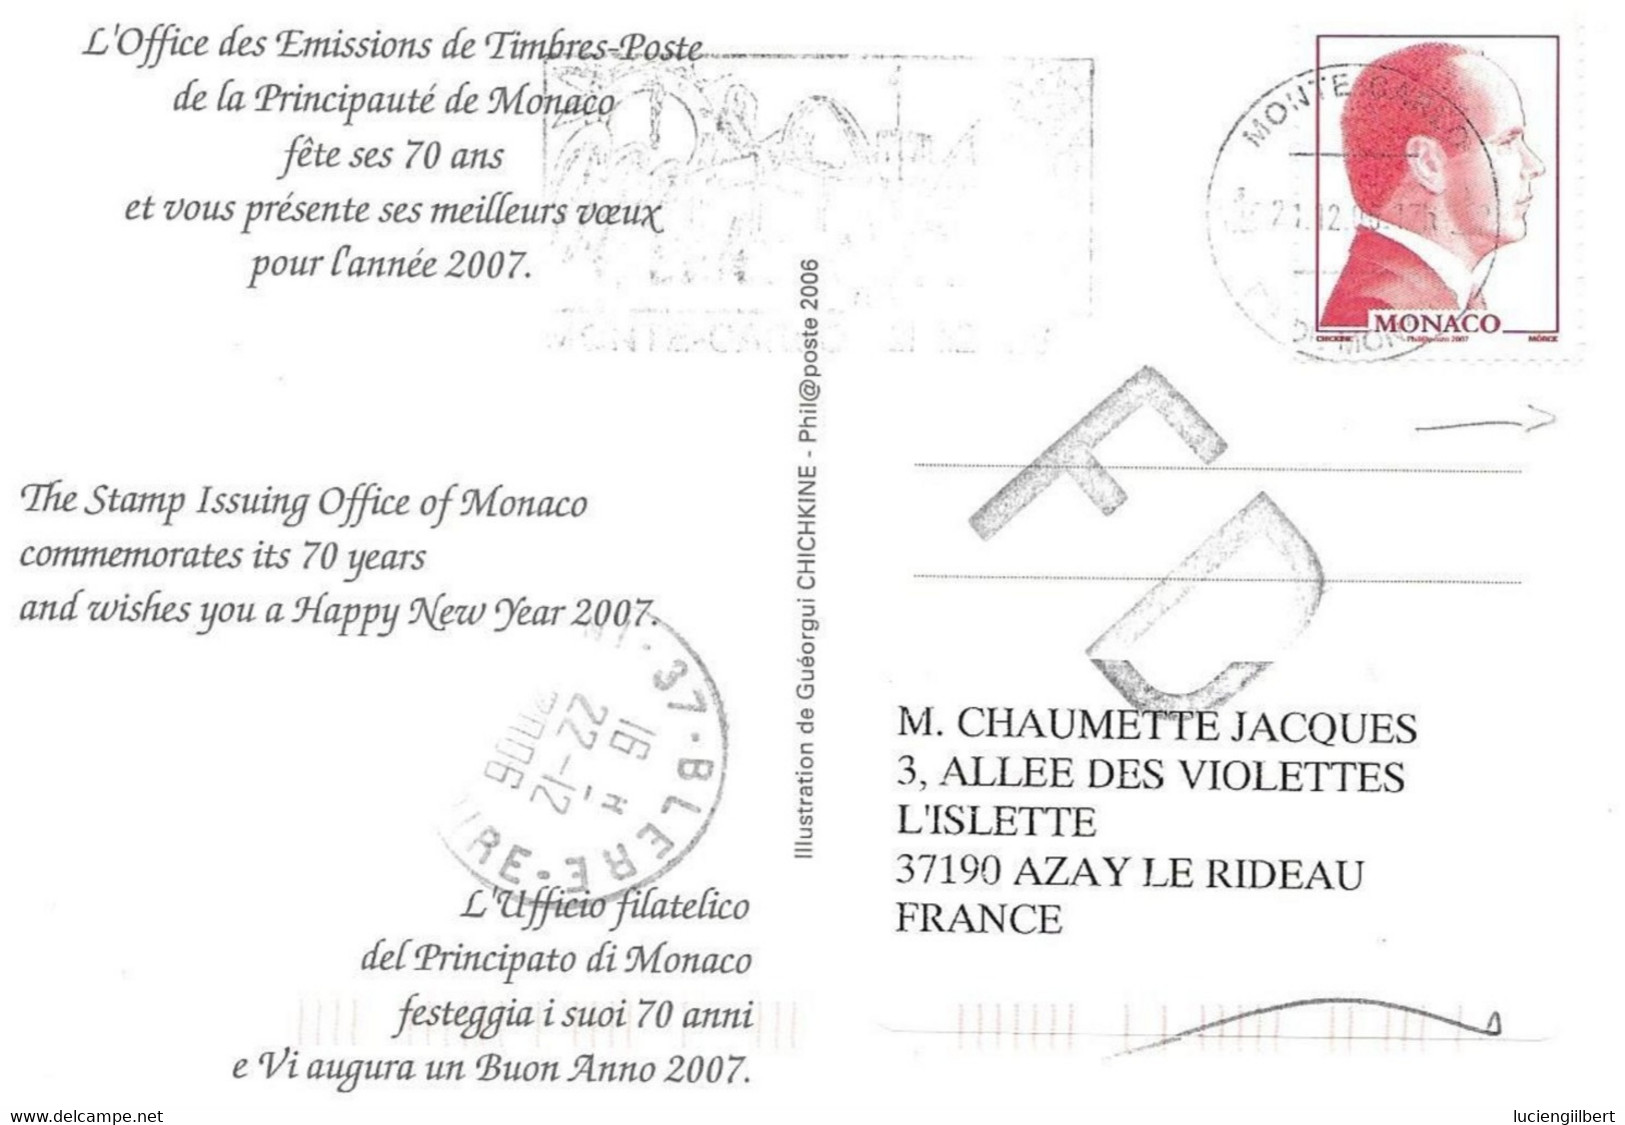 MONACO  -   MONTE CARLO  -   TIMBRE N° 2562 -   TARIF DU 1 10 06 AU 28 2 08 -  -  2006 - GRAVURE S.A.S. PRINCE ALBERT II - Storia Postale